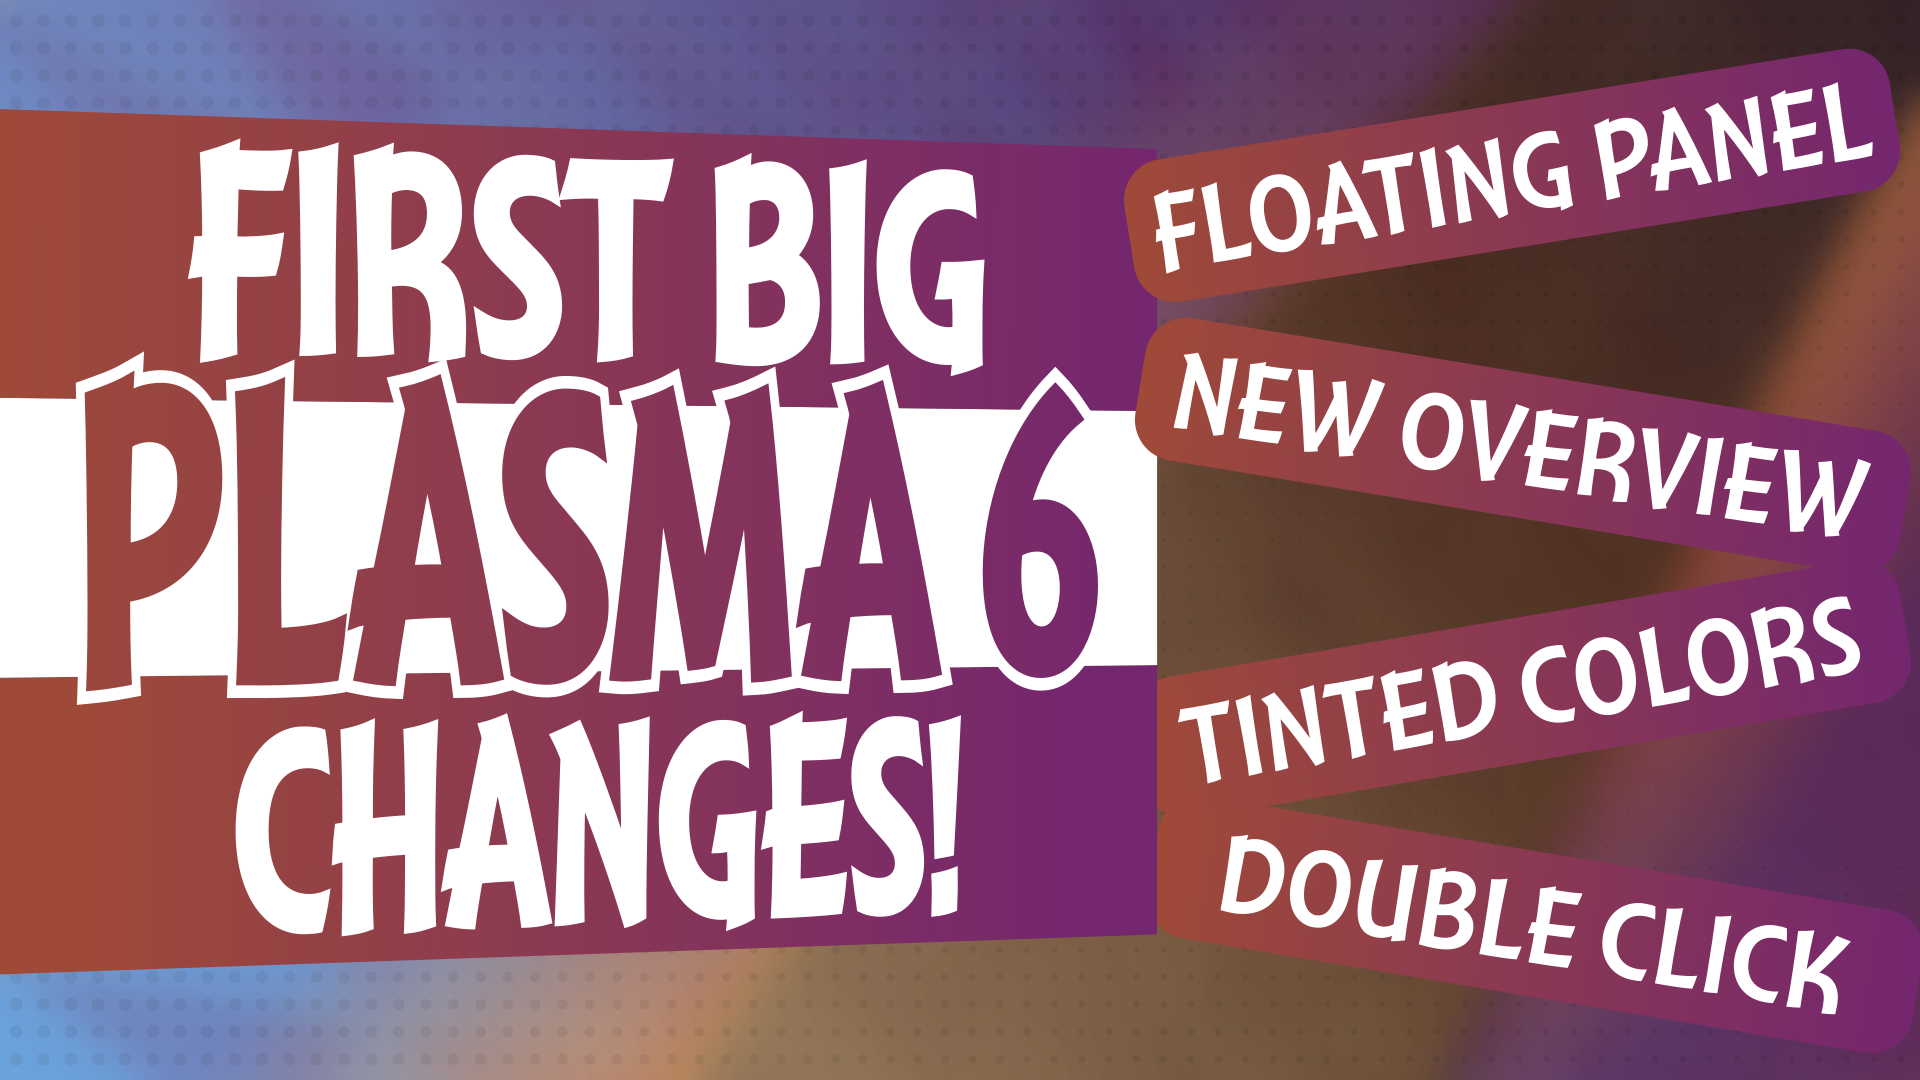 First Big Plamsa 6 Changes!